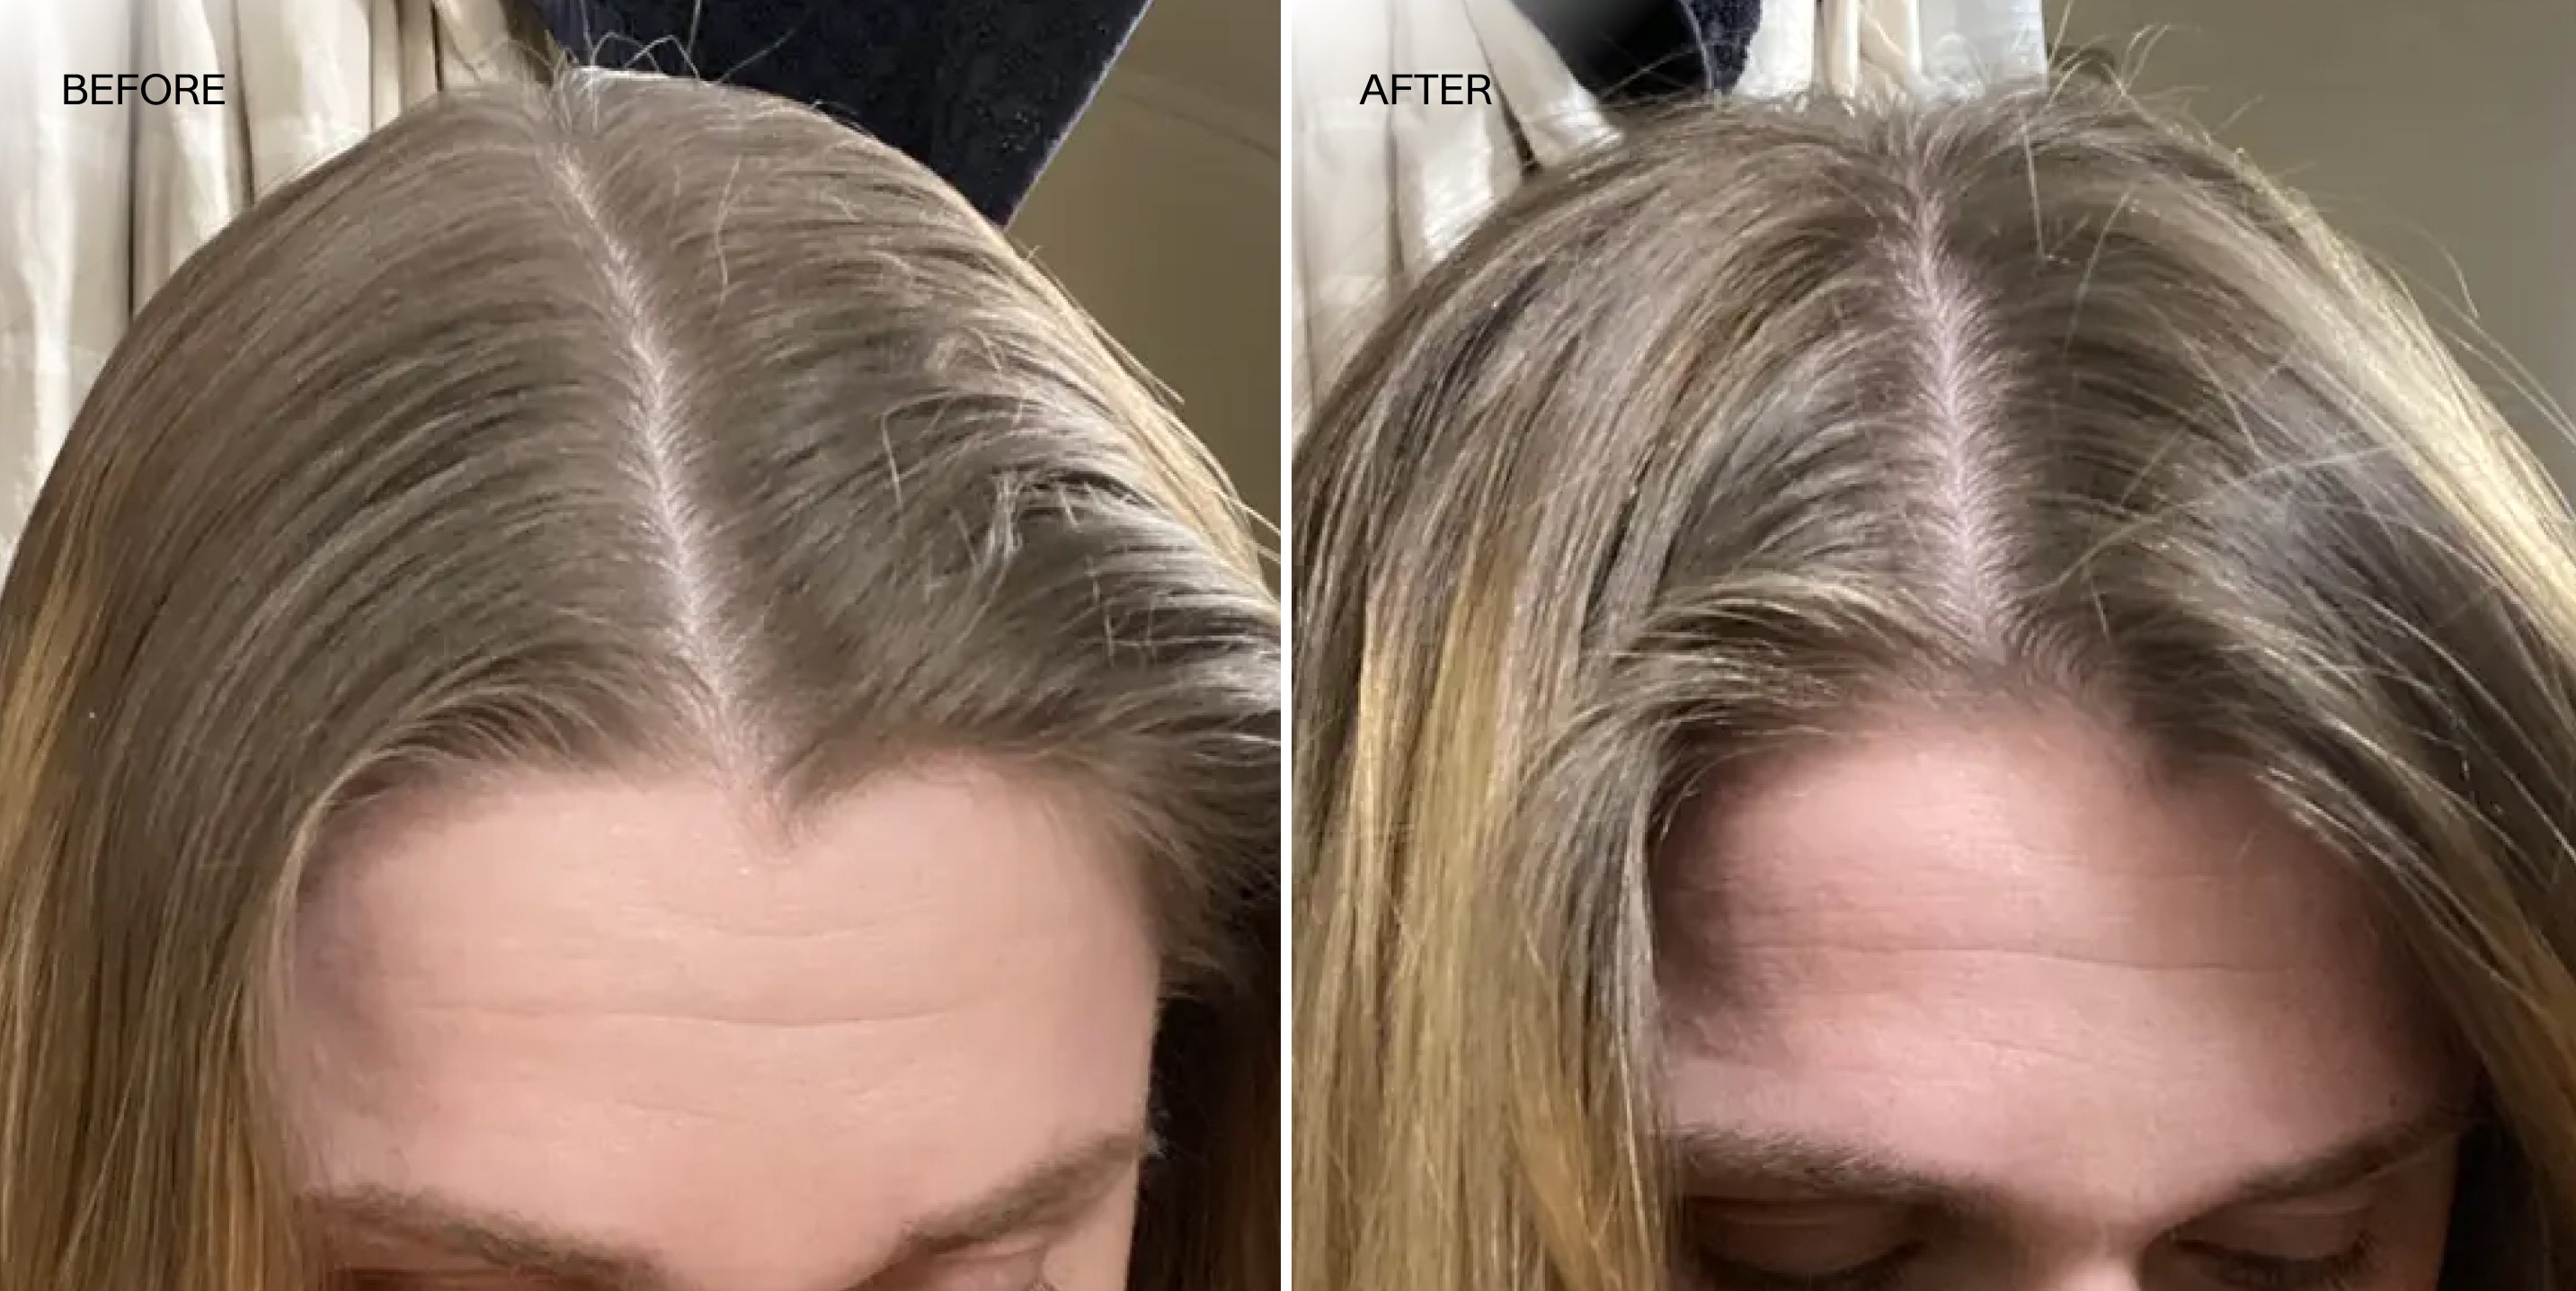 JVN Pre-Wash Scalp Oil | Rosemary-Infused Scalp Treatment – JVN Hair